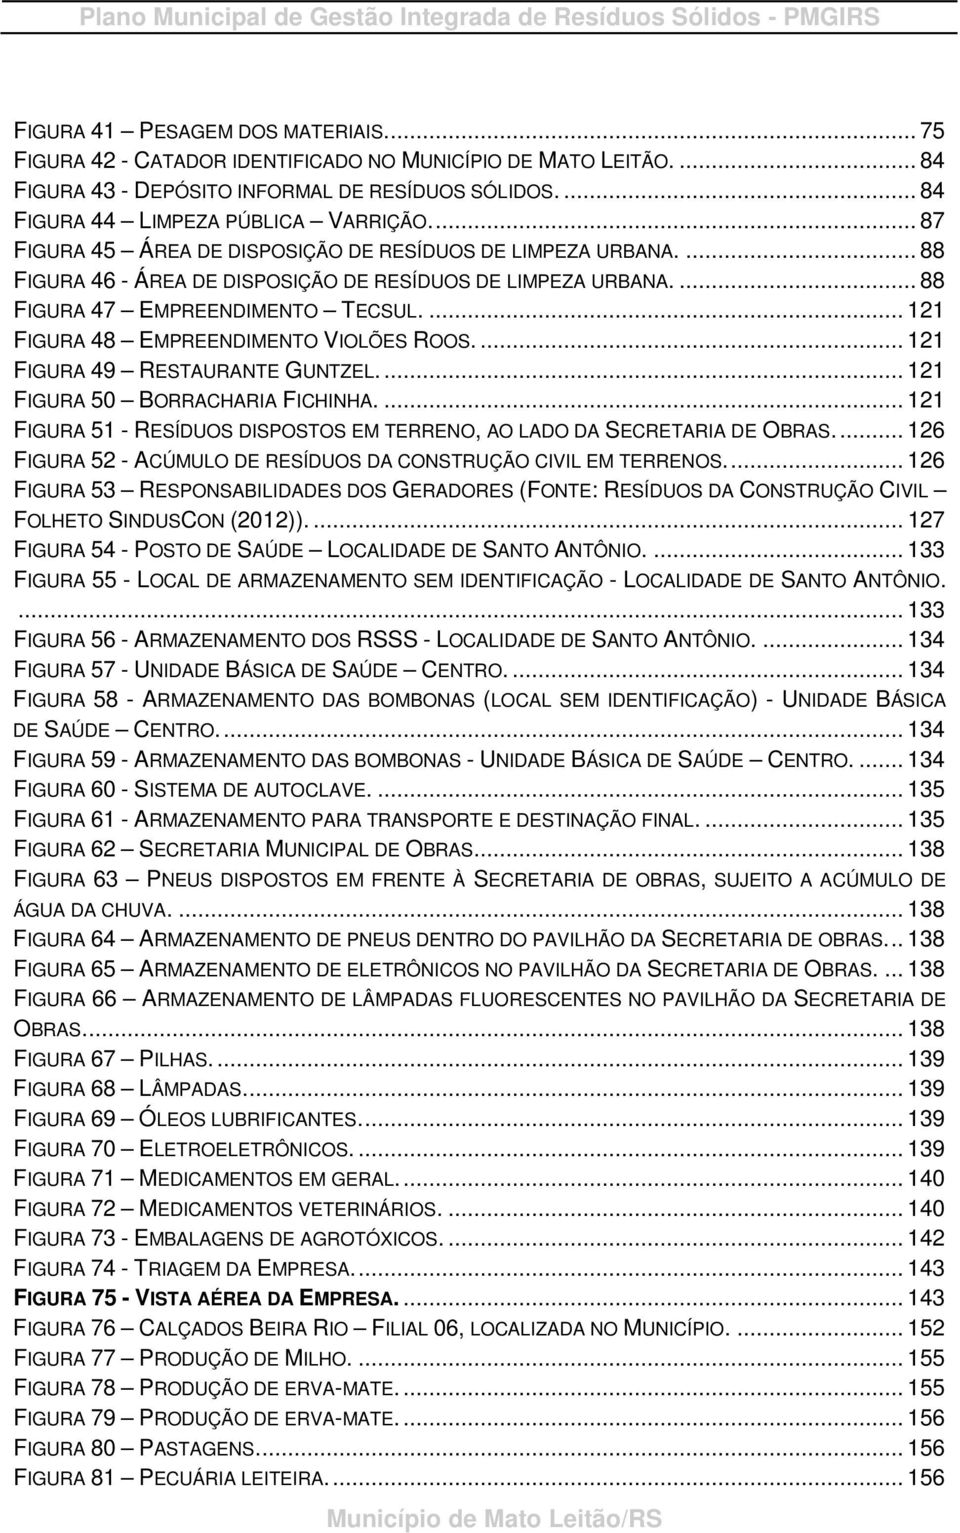 ... 88 FIGURA 46 ÁREA DE DISPOSIÇÃO DE RESÍDUOS DE LIMPEZA URBANA.... 88 FIGURA 47 EMPREENDIMENTO TECSUL.... 121 FIGURA 48 EMPREENDIMENTO VIOLÕES ROOS.... 121 FIGURA 49 RESTAURANTE GUNTZEL.